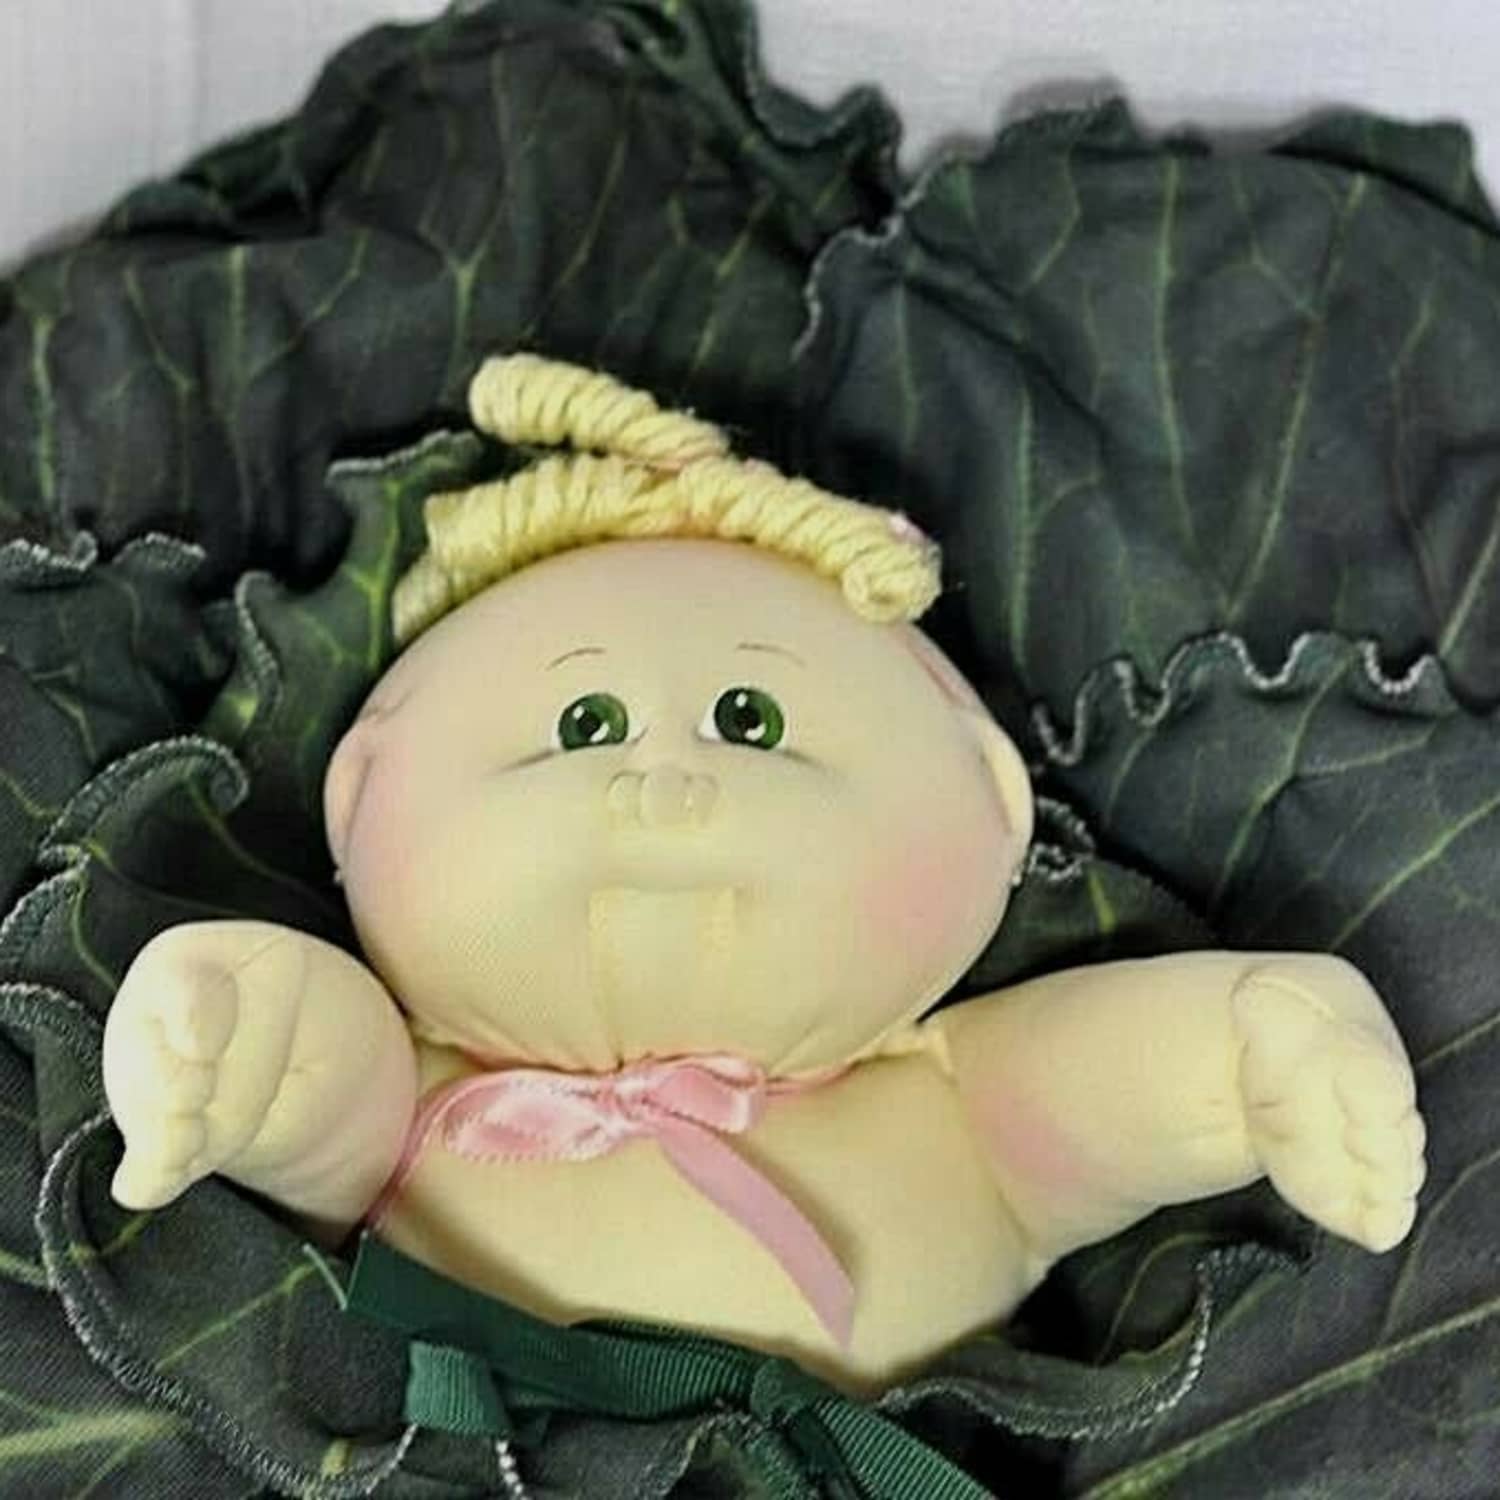 cabbage doll worth